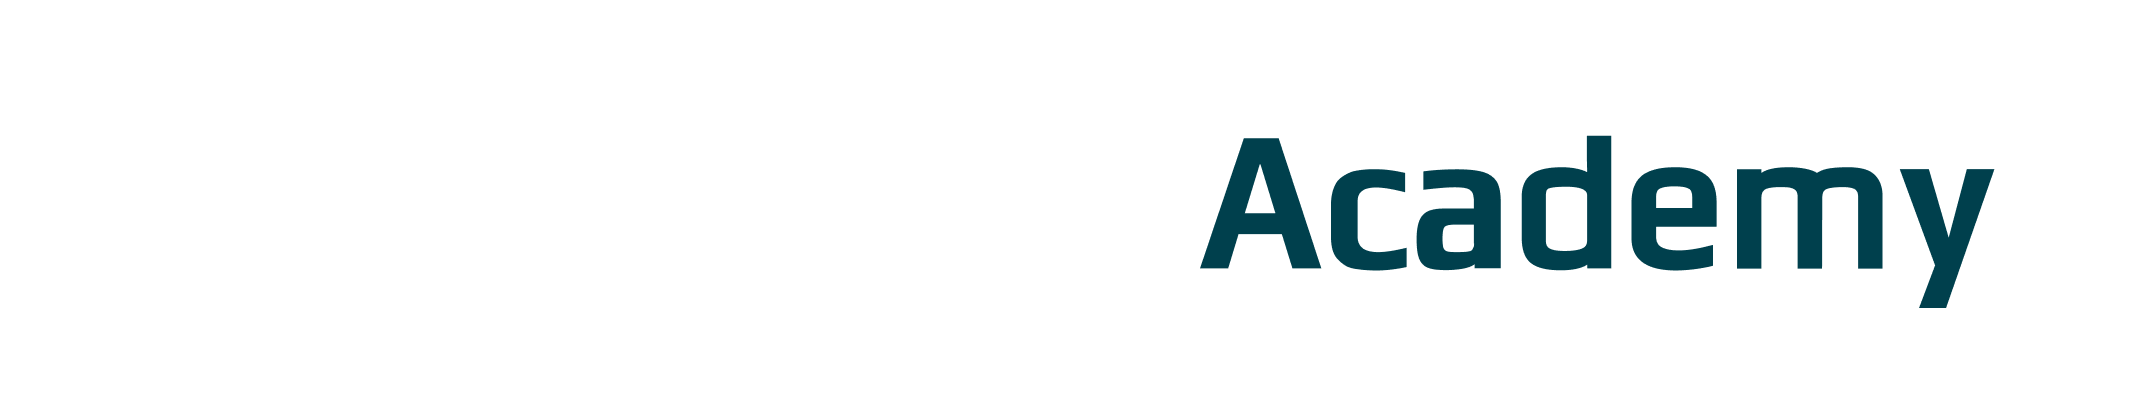 Acadmy-logo-2